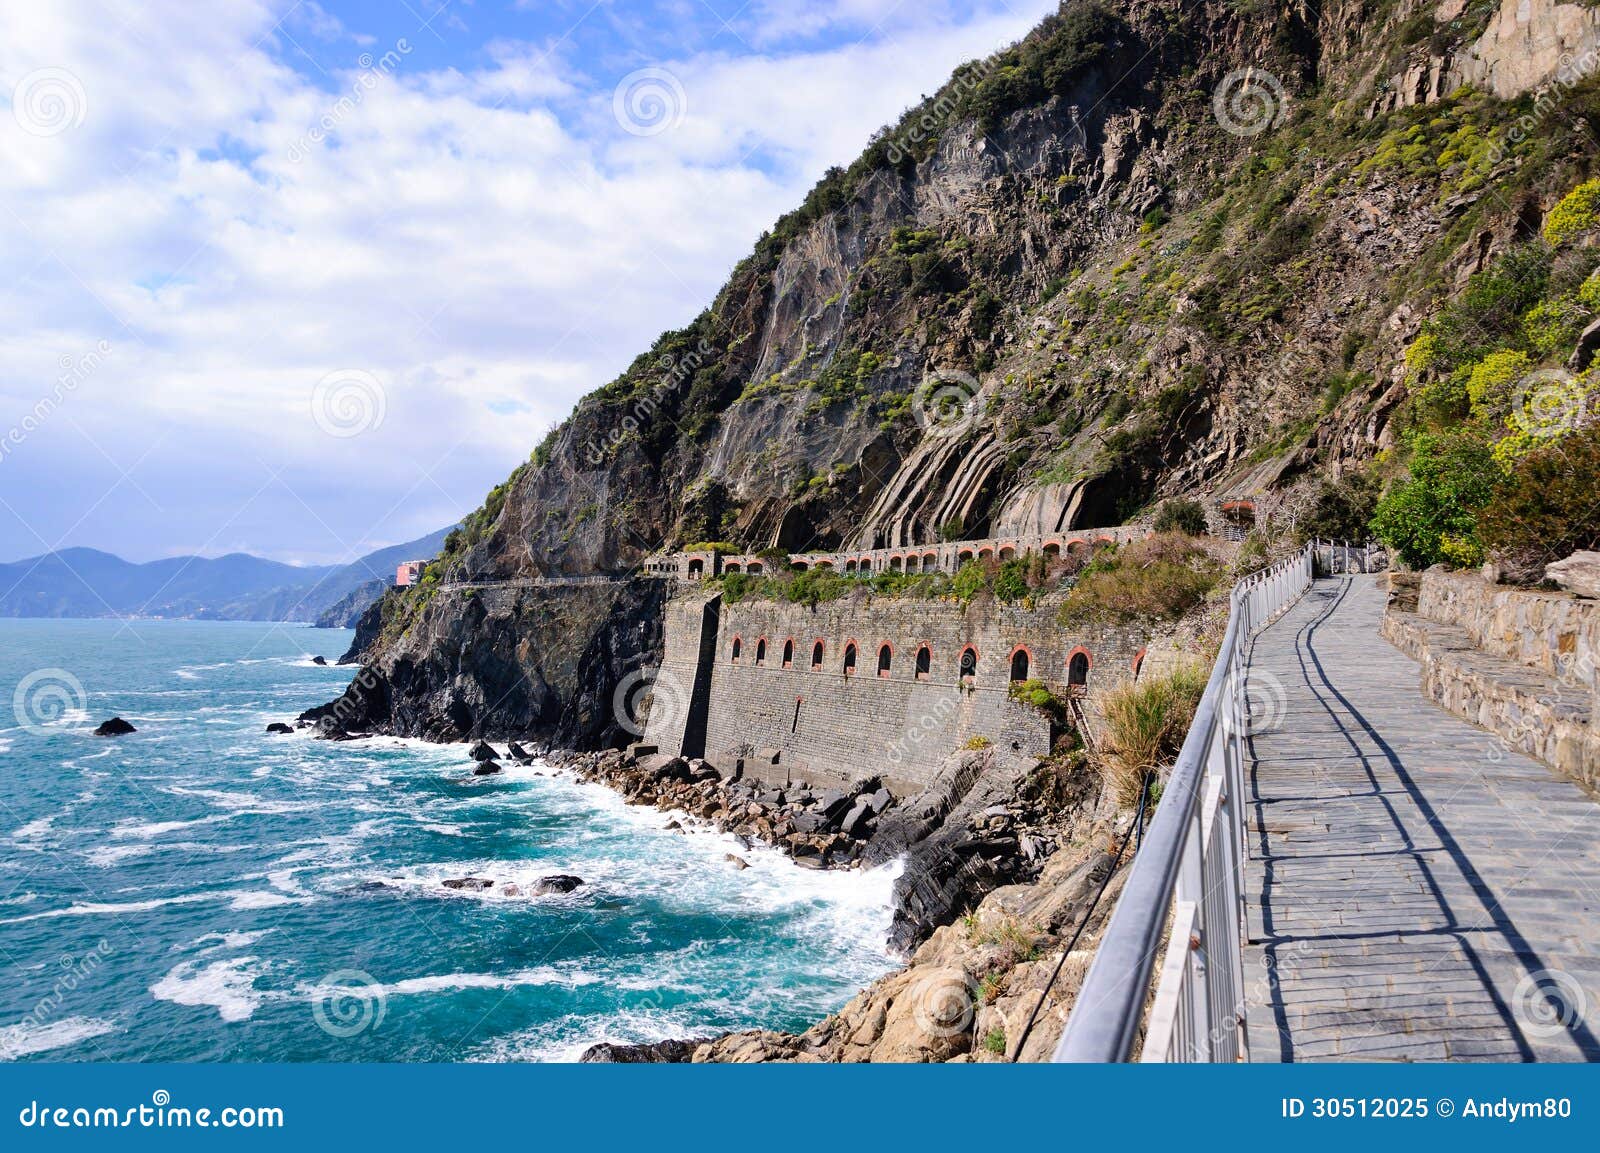 the walkway along the coastline, via del amore in the national park cinque terre